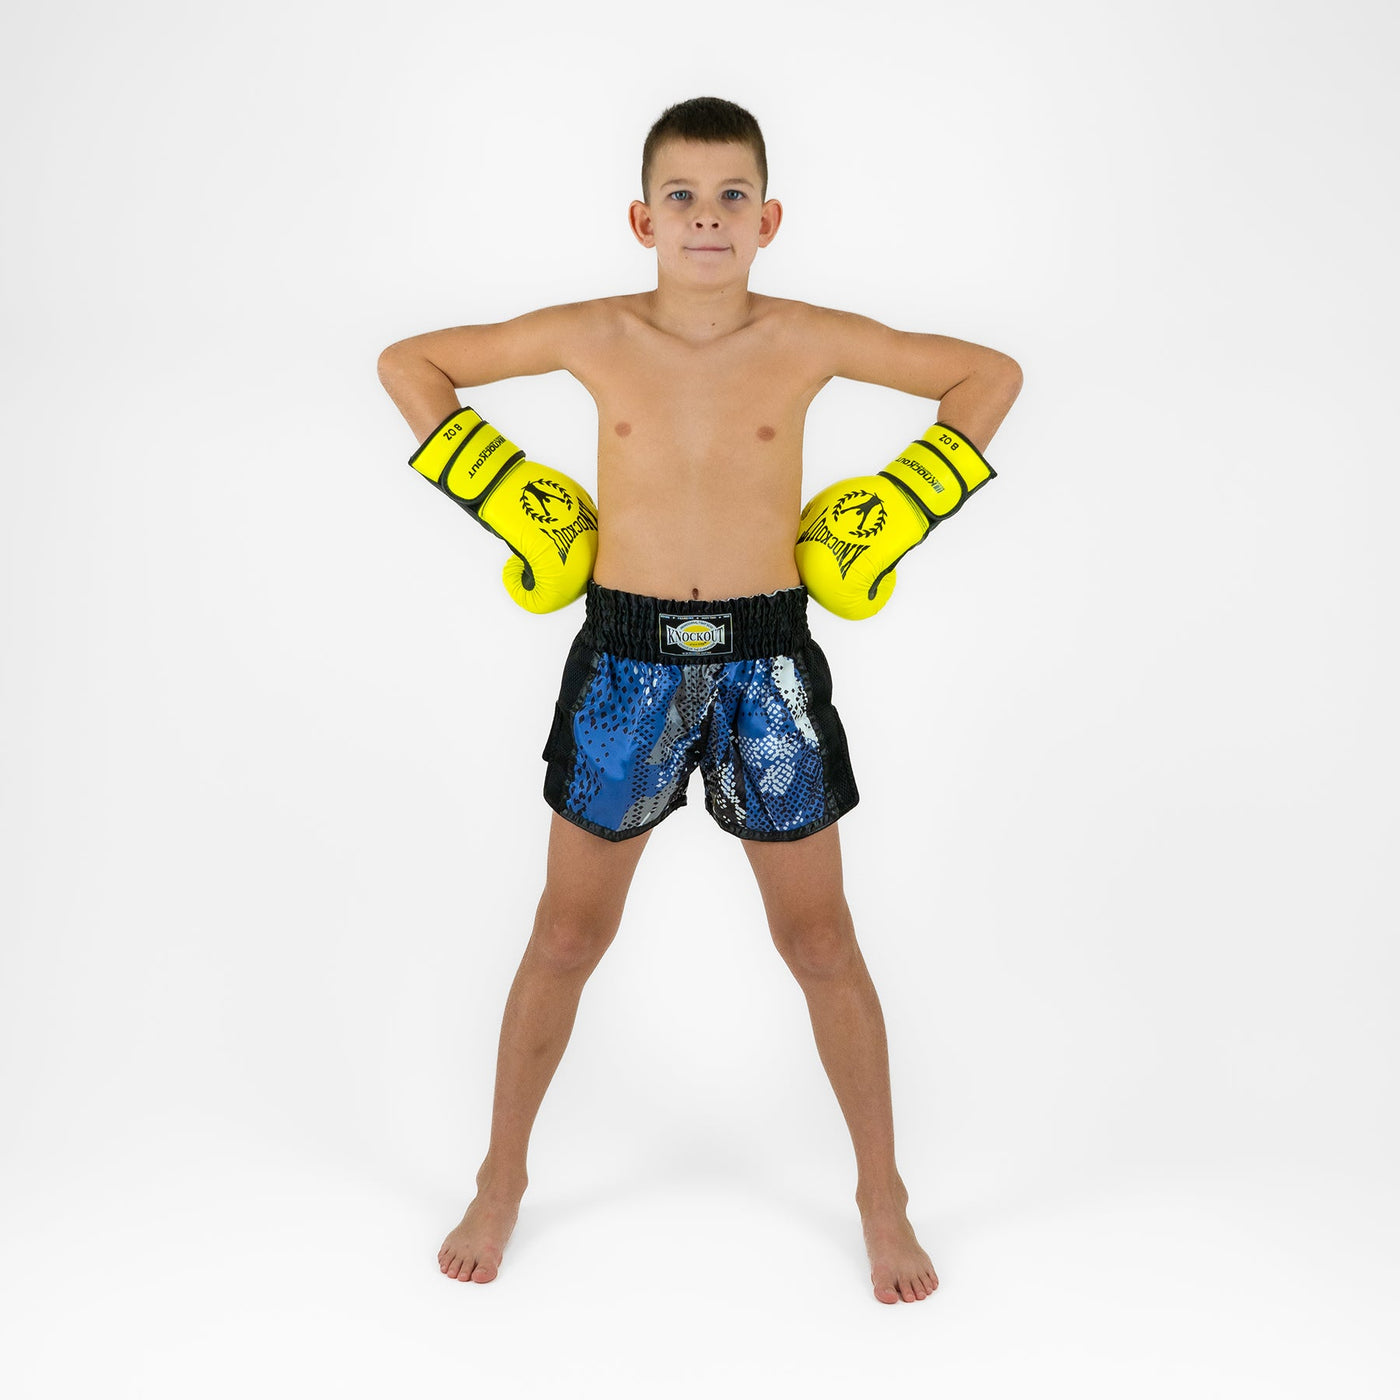 Manusi Box Knockout Copii | knock-out.ro